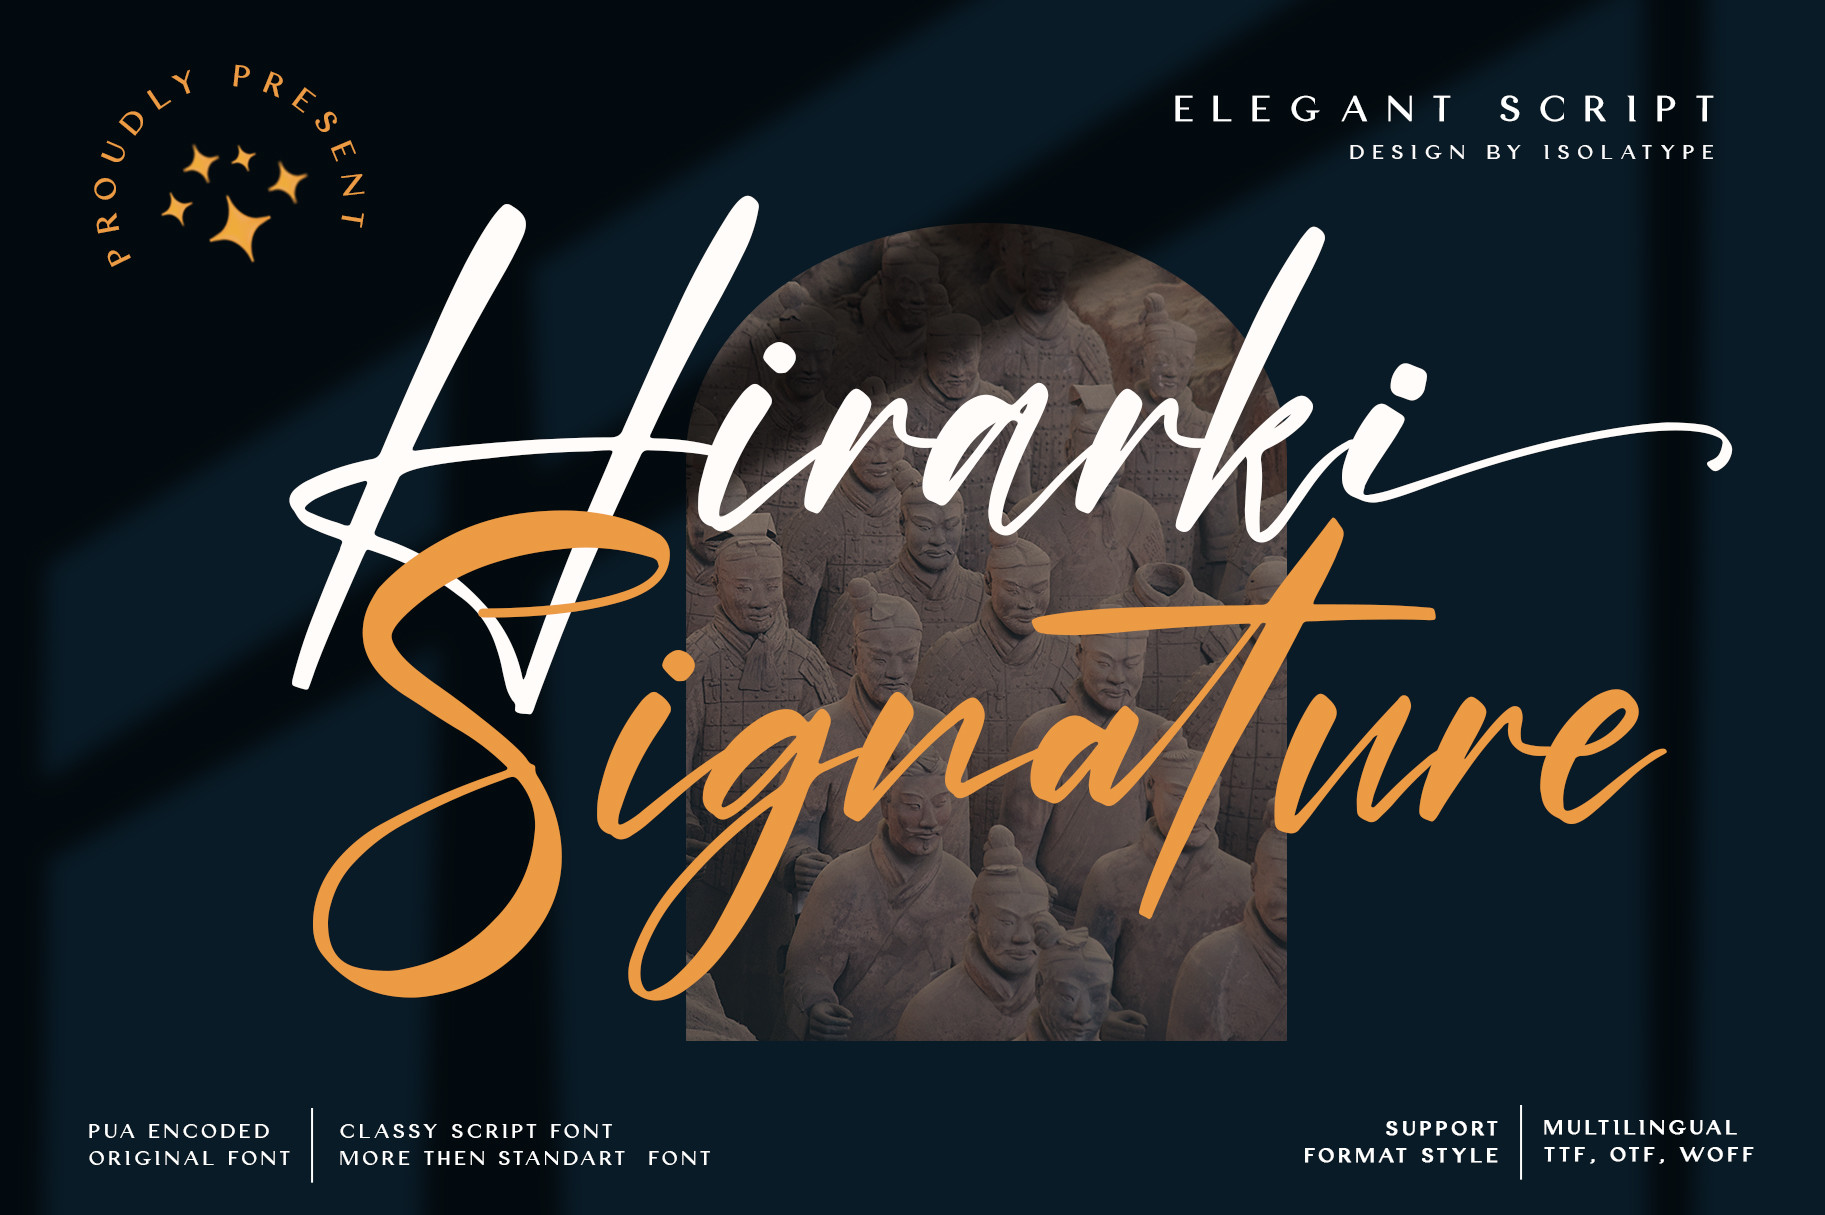 Hirarki Signature (Demo)